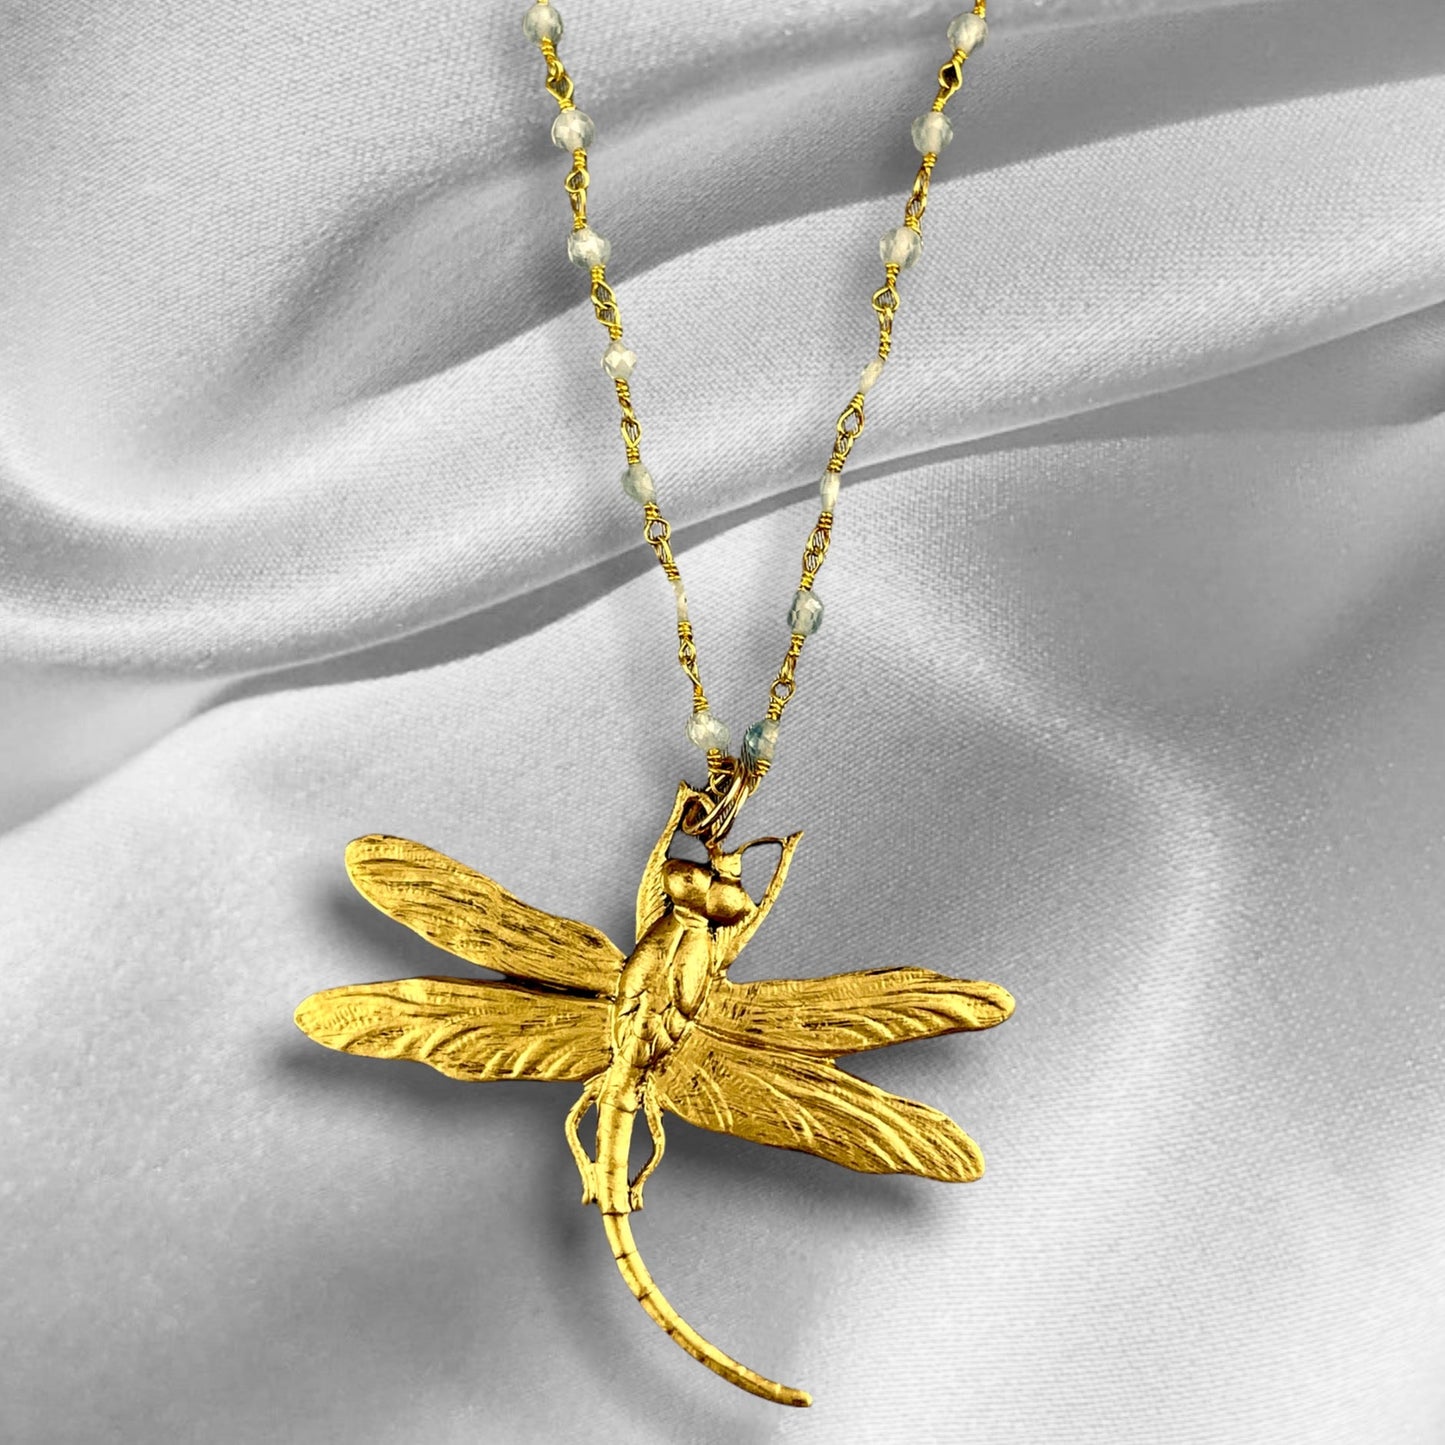 Aquamarine gemstone chain with dragonfly - gemstone jewelry - VIK-116